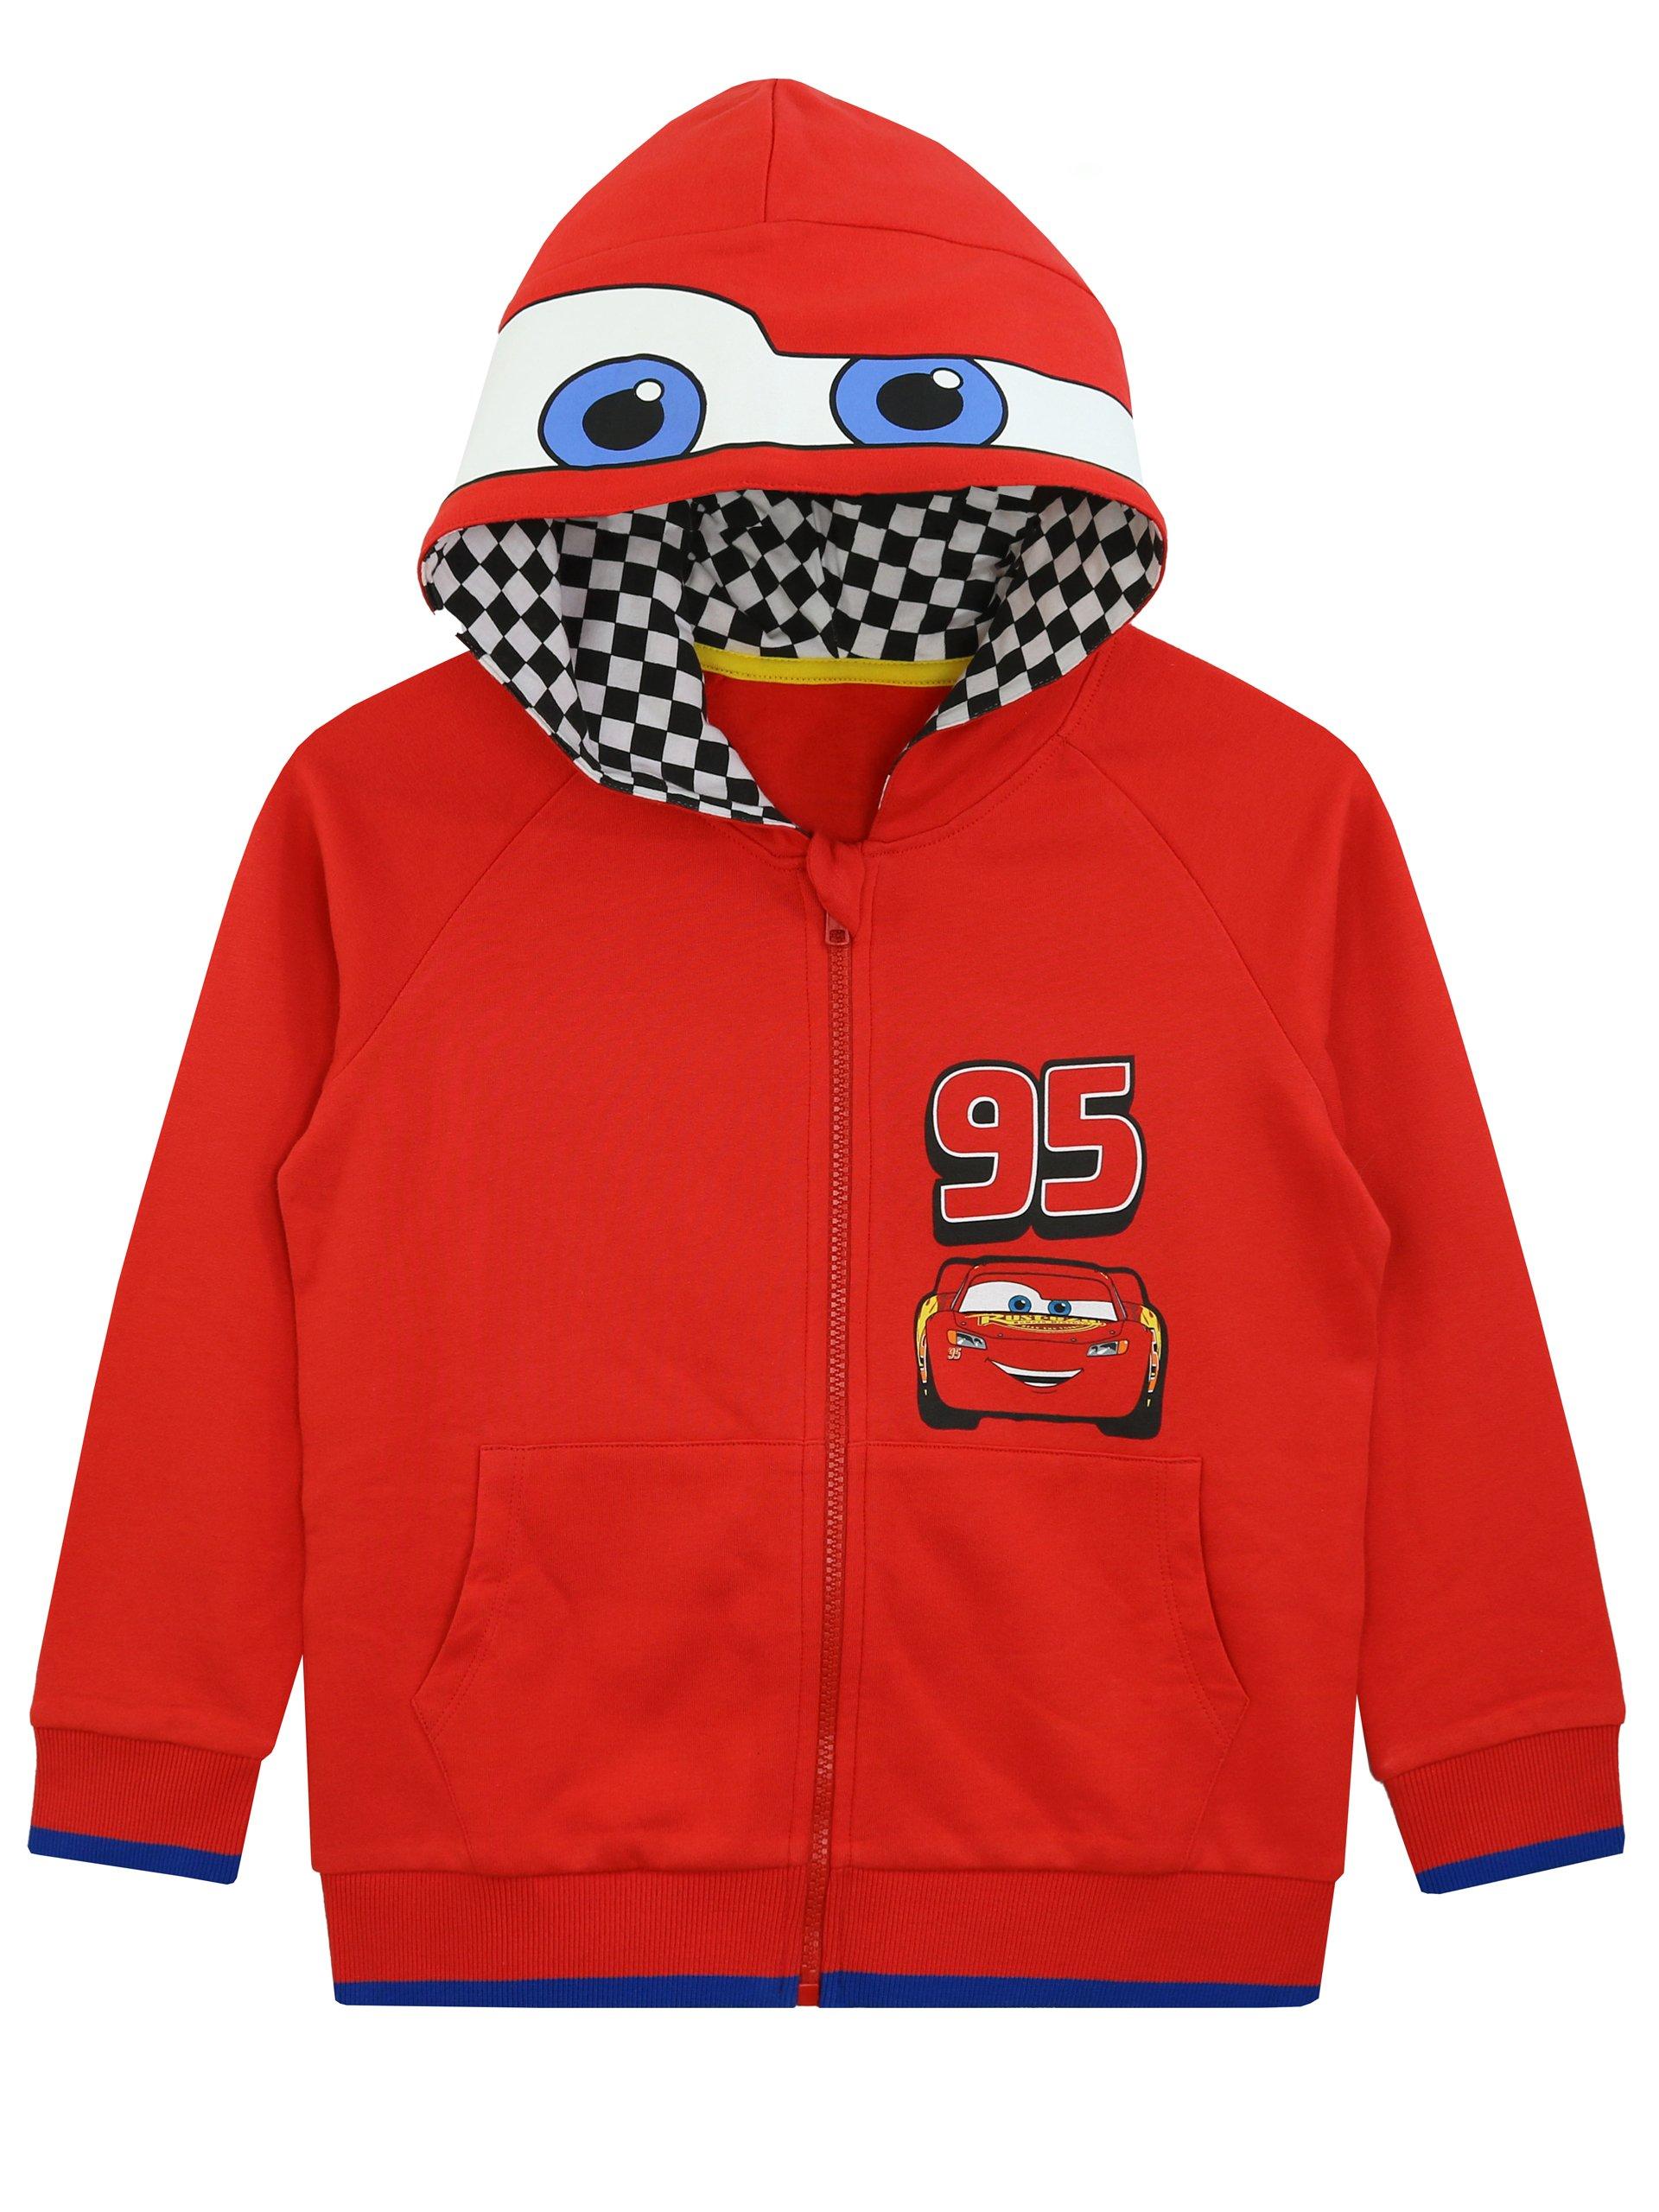 Disney Cars' Lightning McQueen Hooded Pullover, Half-Zip Fleece